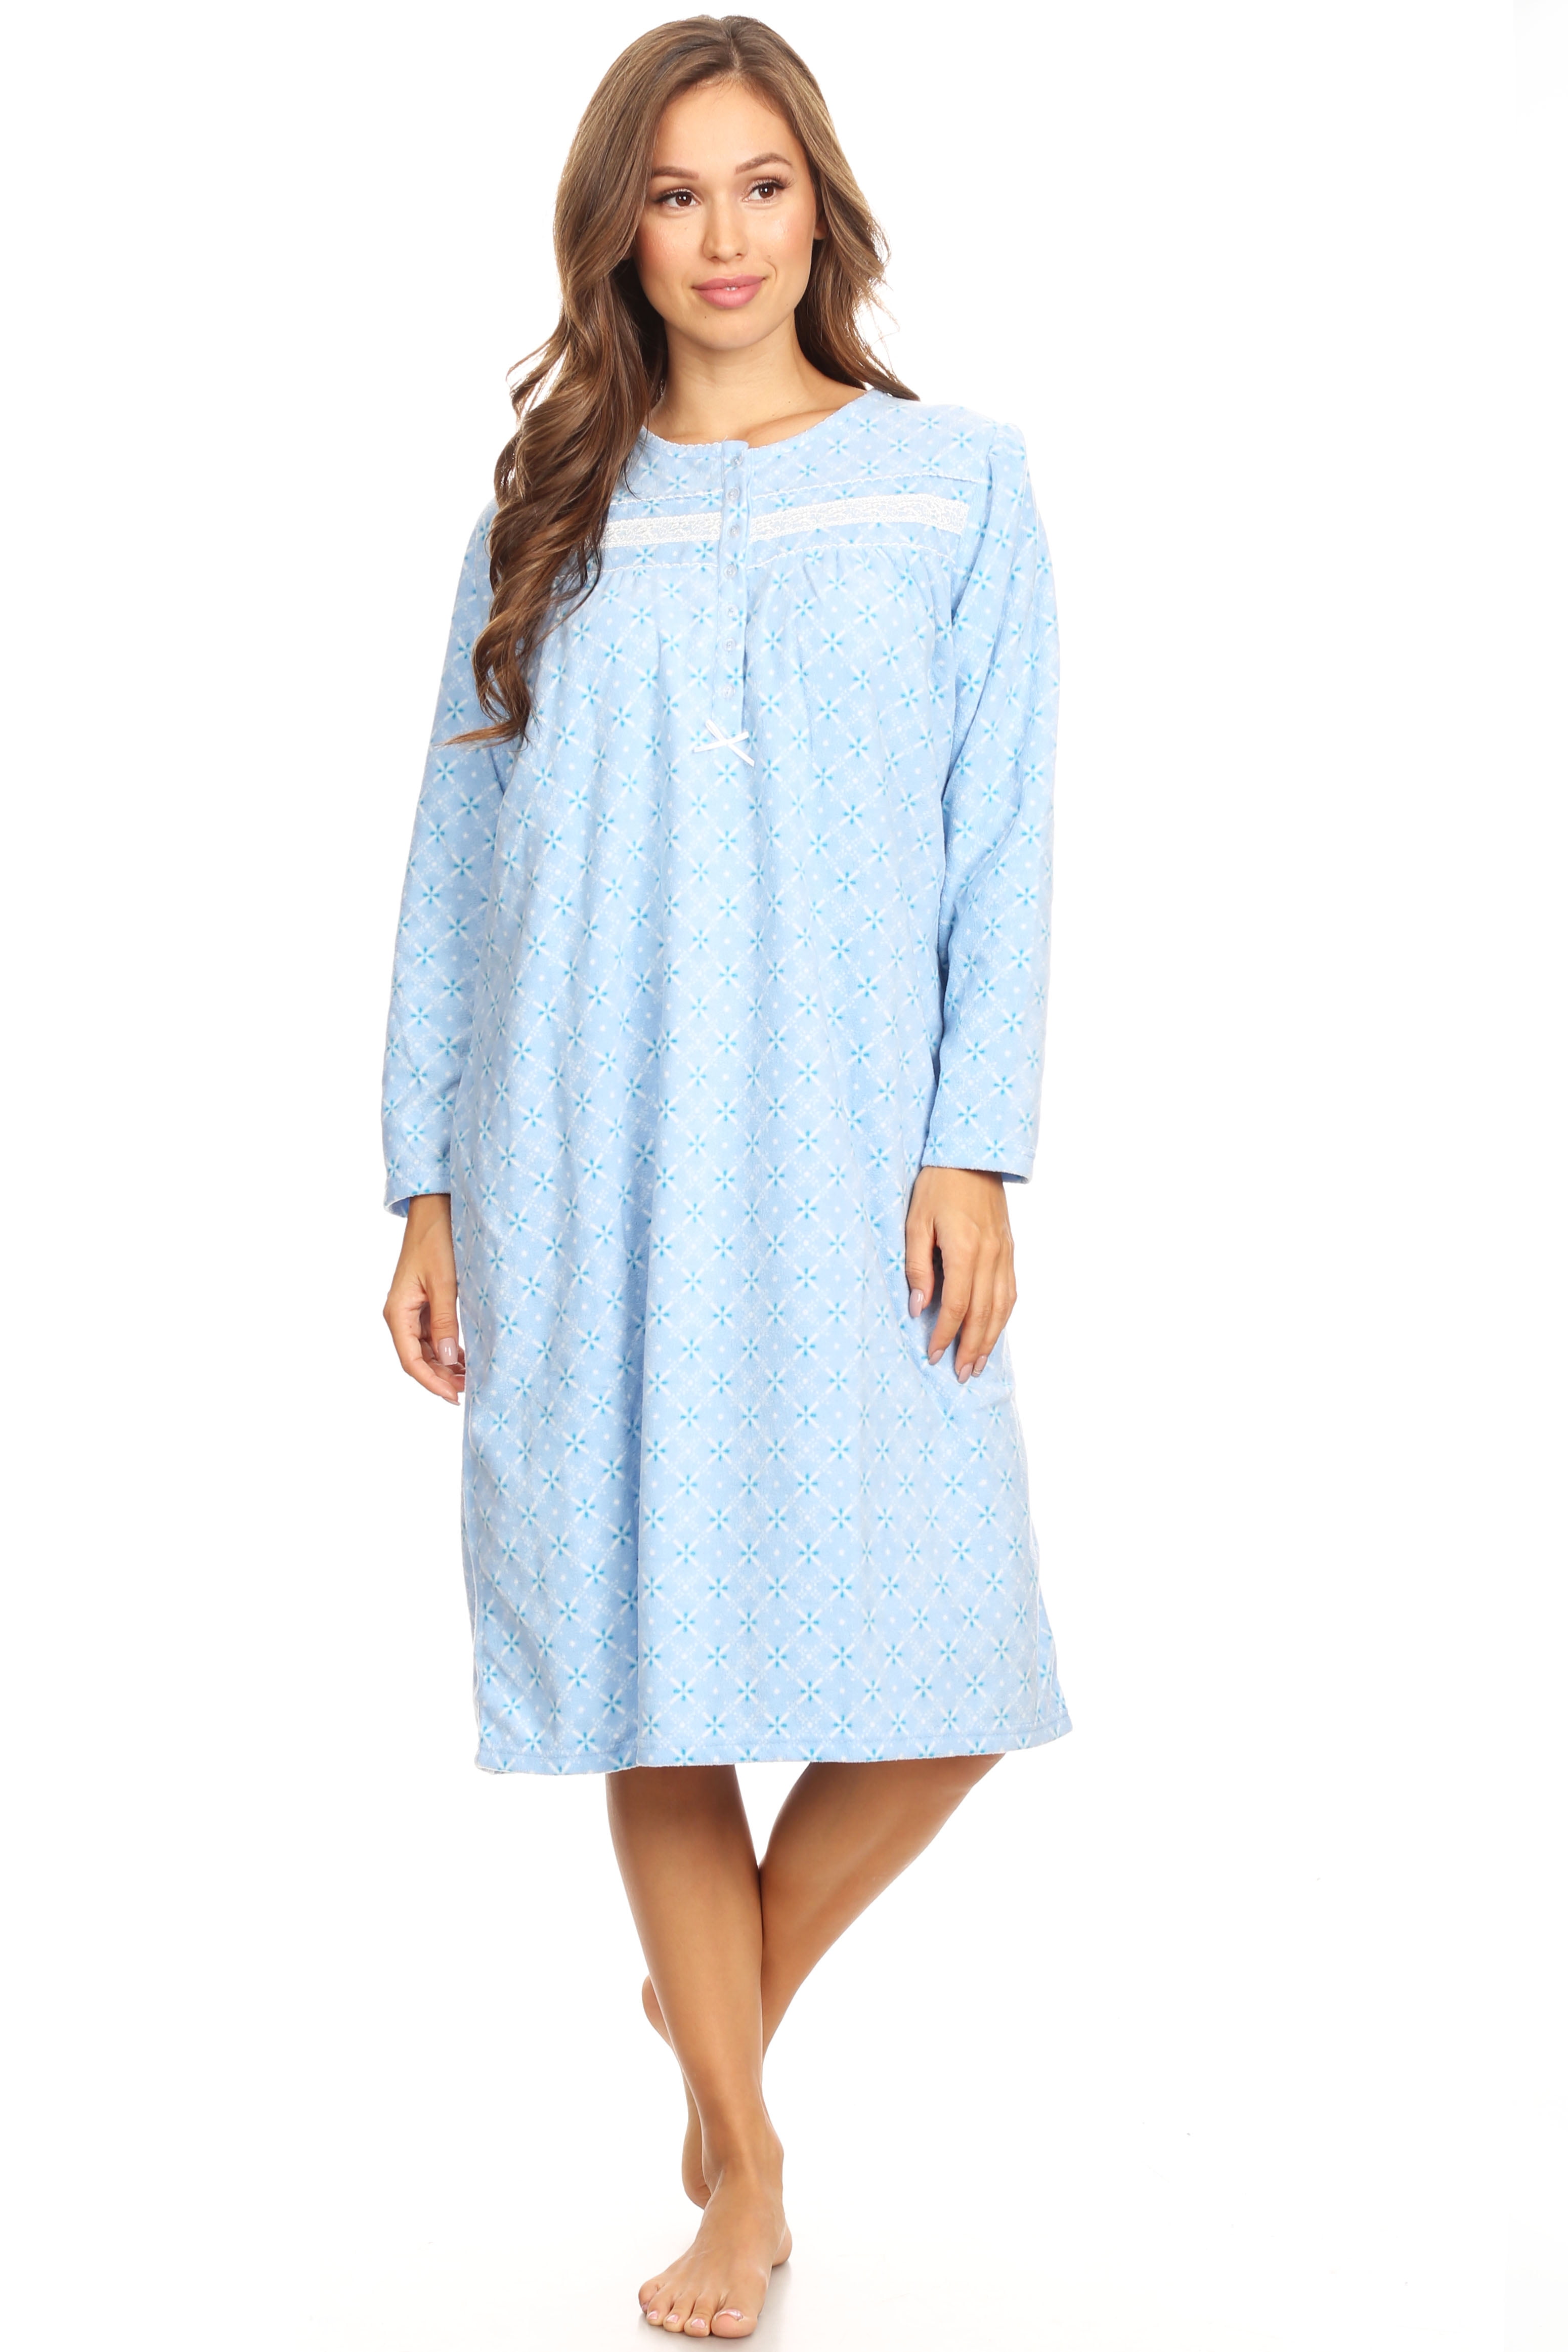 4028 Fleece Womens Nightgown Sleepwear Pajamas Woman Long Sleeve Sleep ...